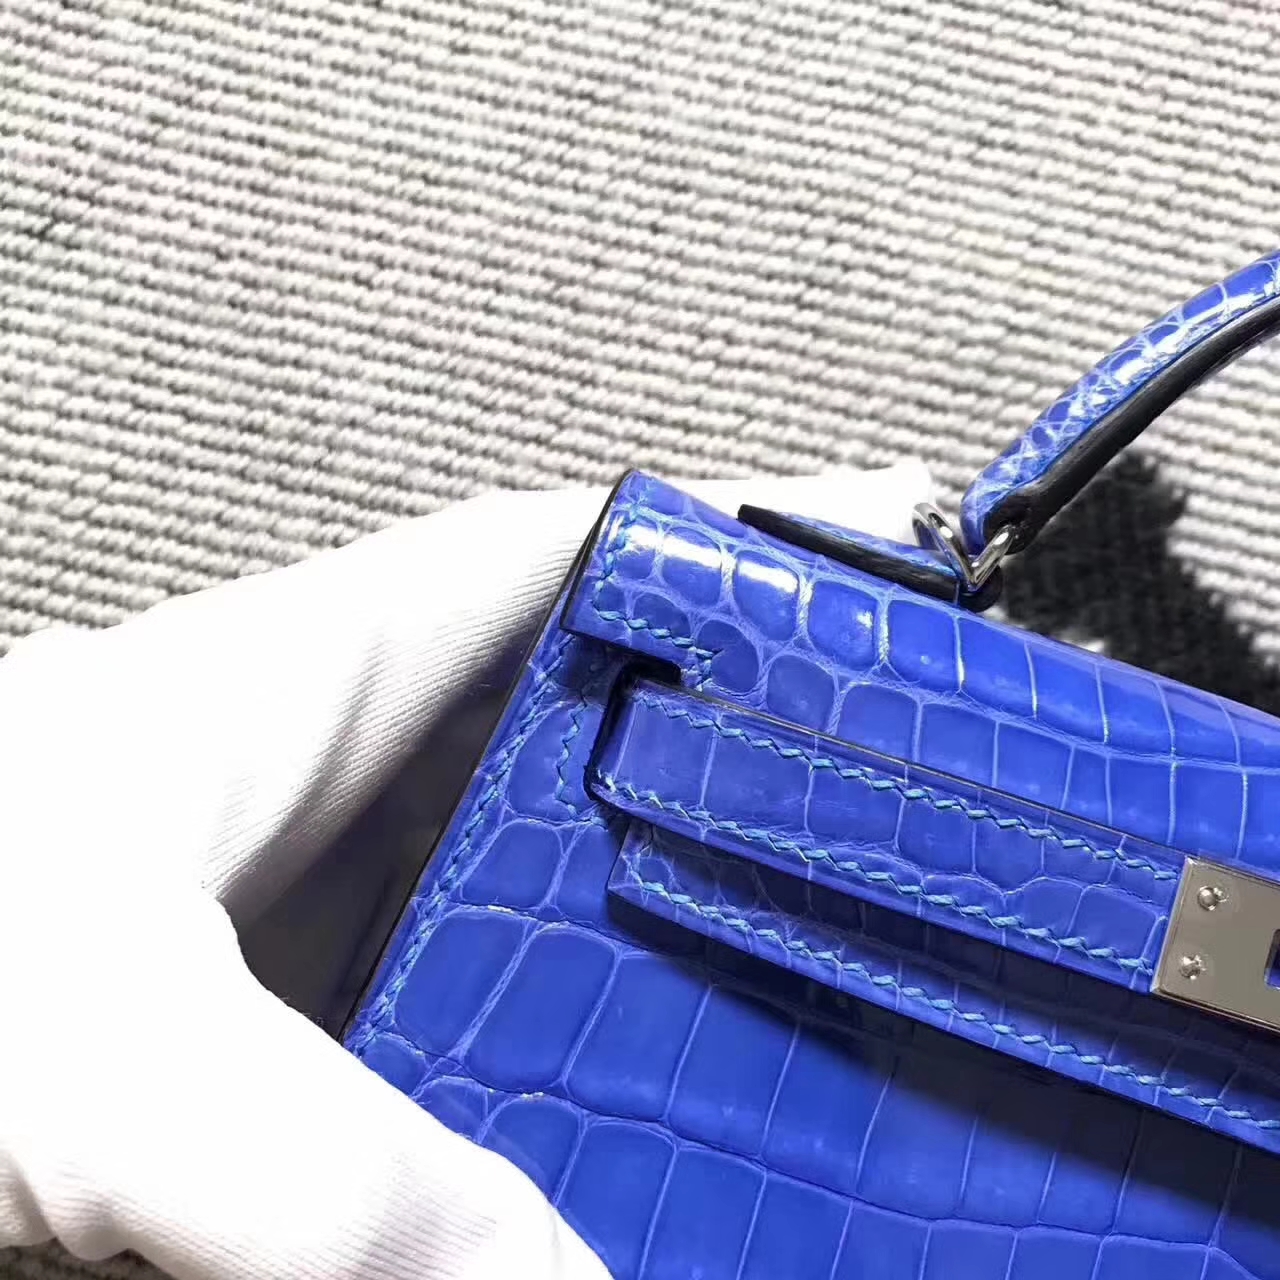 Cheap Hermes Blue Izmir  Crocodile Shiny Leather Minikelly-2 Clutch Bag